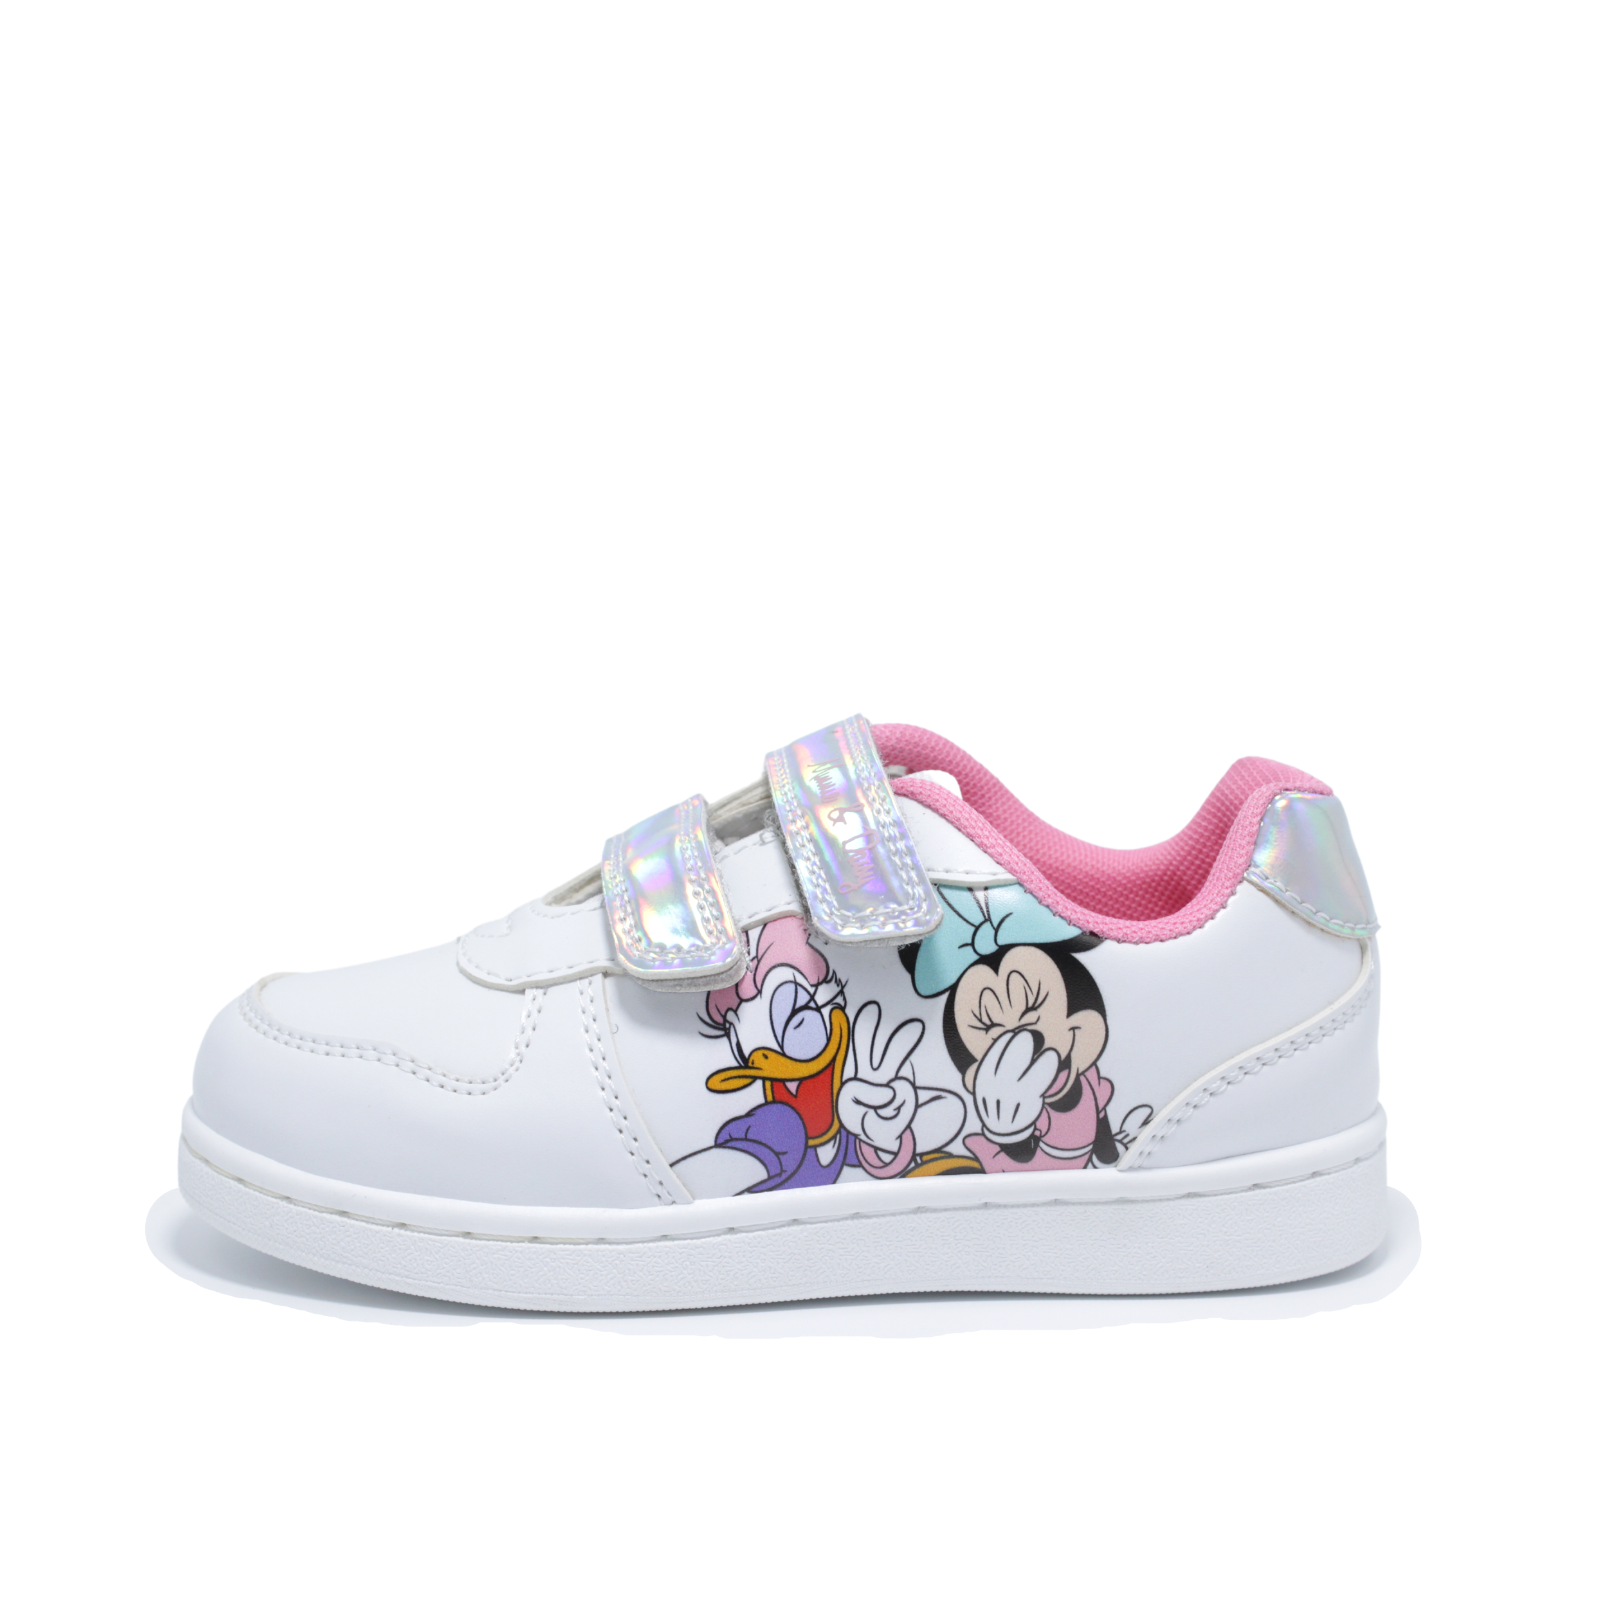 Unrelenting Faculty home Pantofi fete Minnie Mouse, Disney 7950, alb, marimi 24-32| kiddiespride.ro